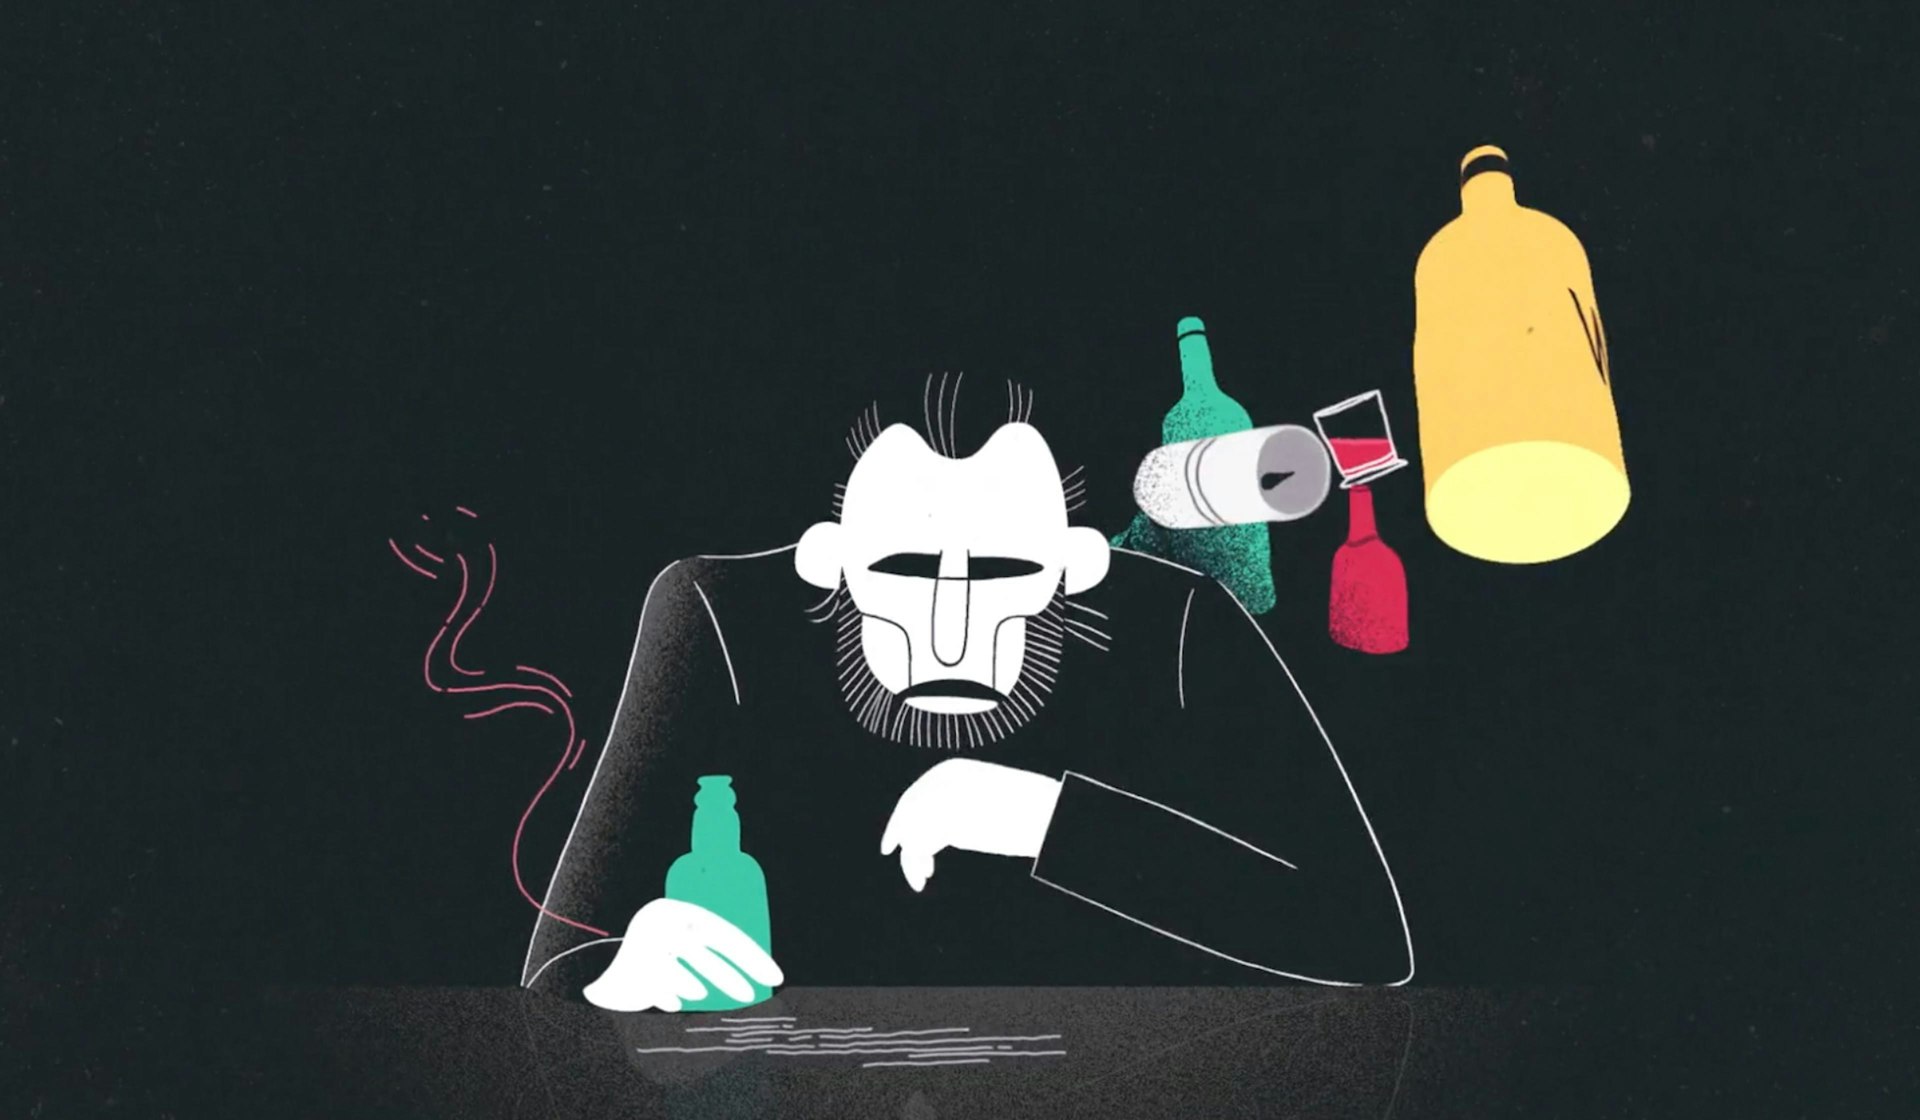 A visual journey through Charles Bukowski’s alcohol-soaked mind